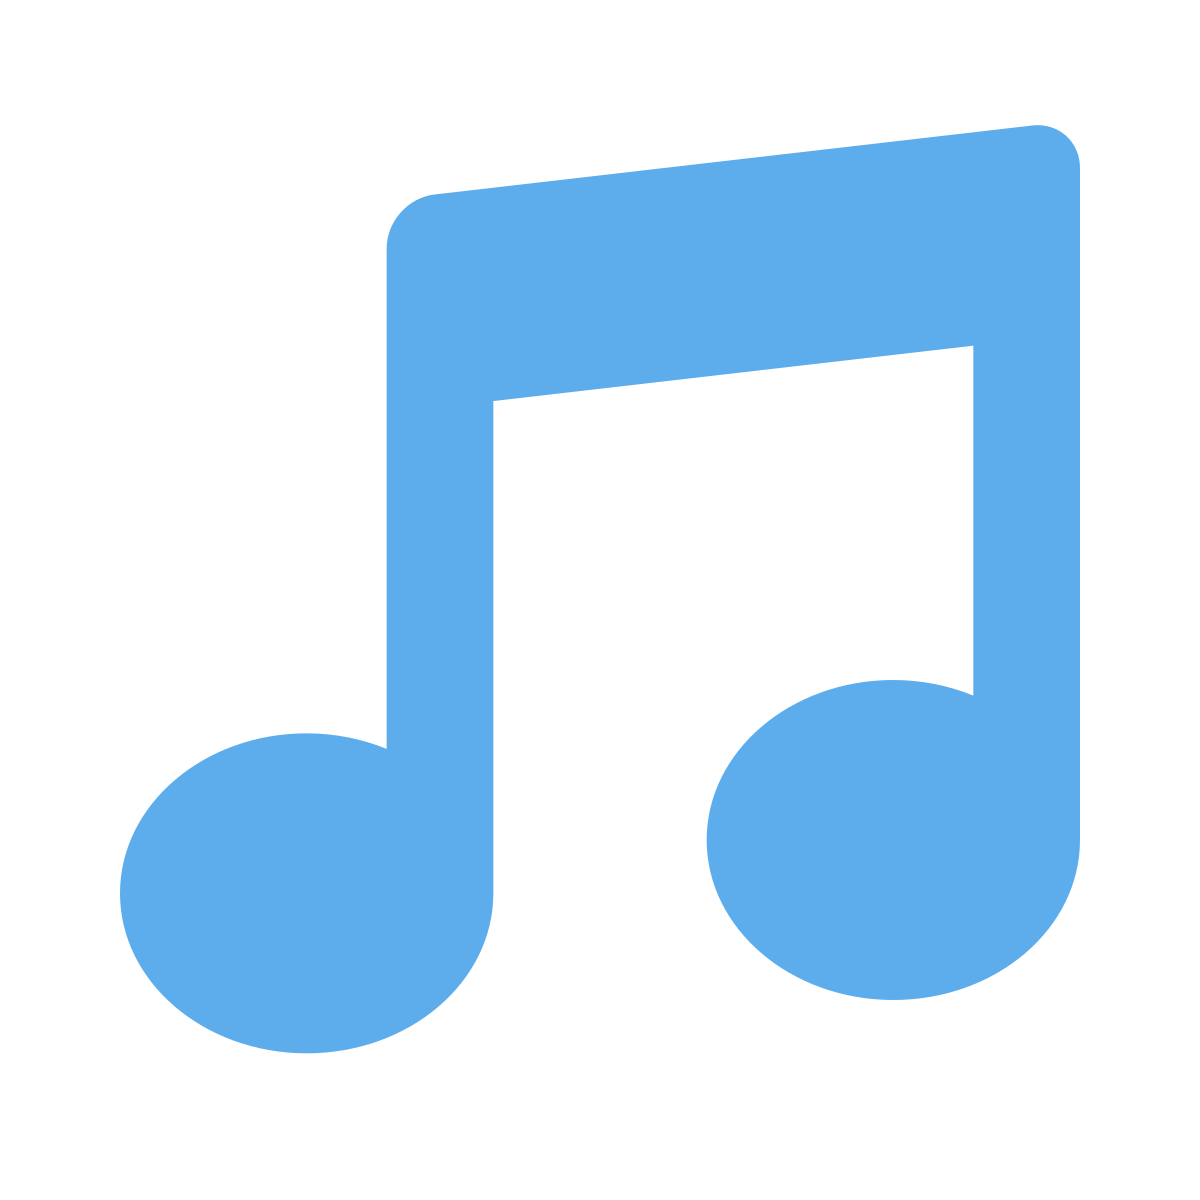 Music emoji. ЭМОДЖИ Ноты. Значок музыки. Голубая Нота. Значок Ноты.